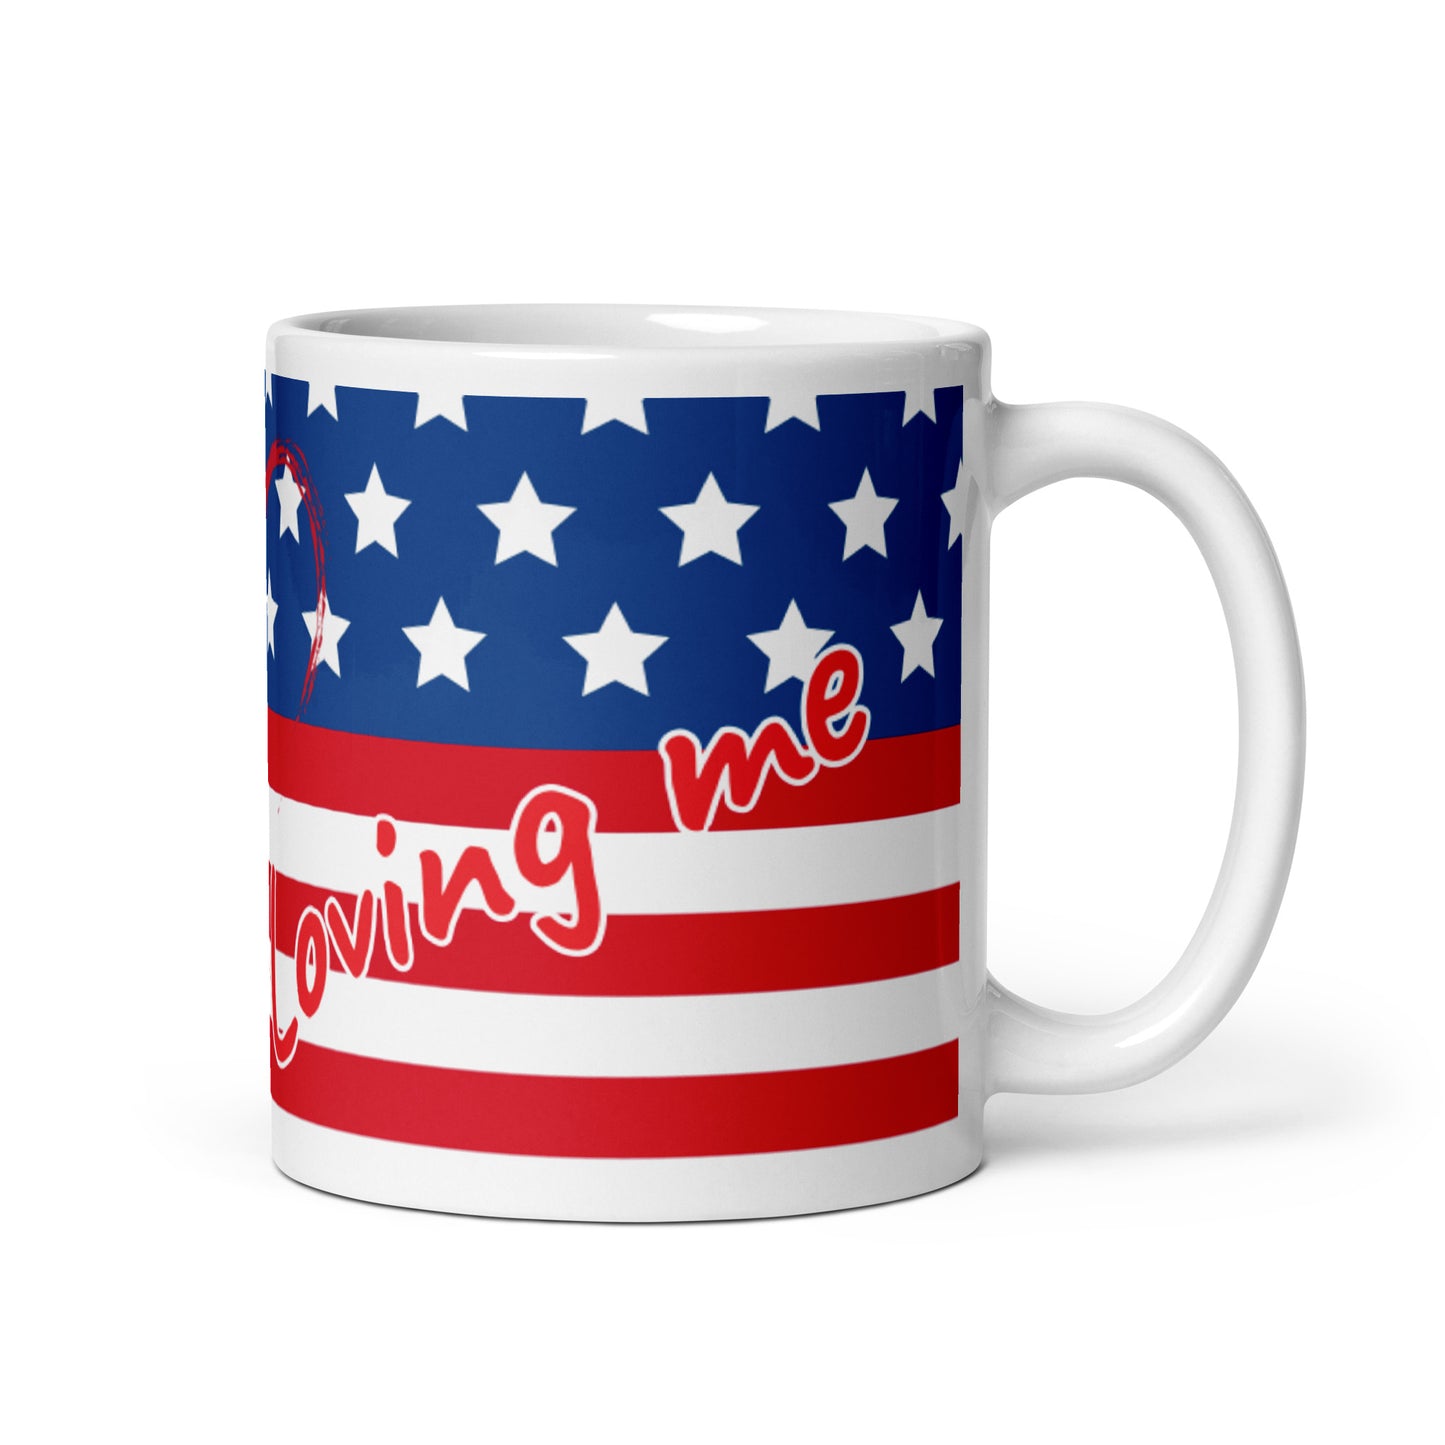 USA White Glossy Mug - Loving you Loving me